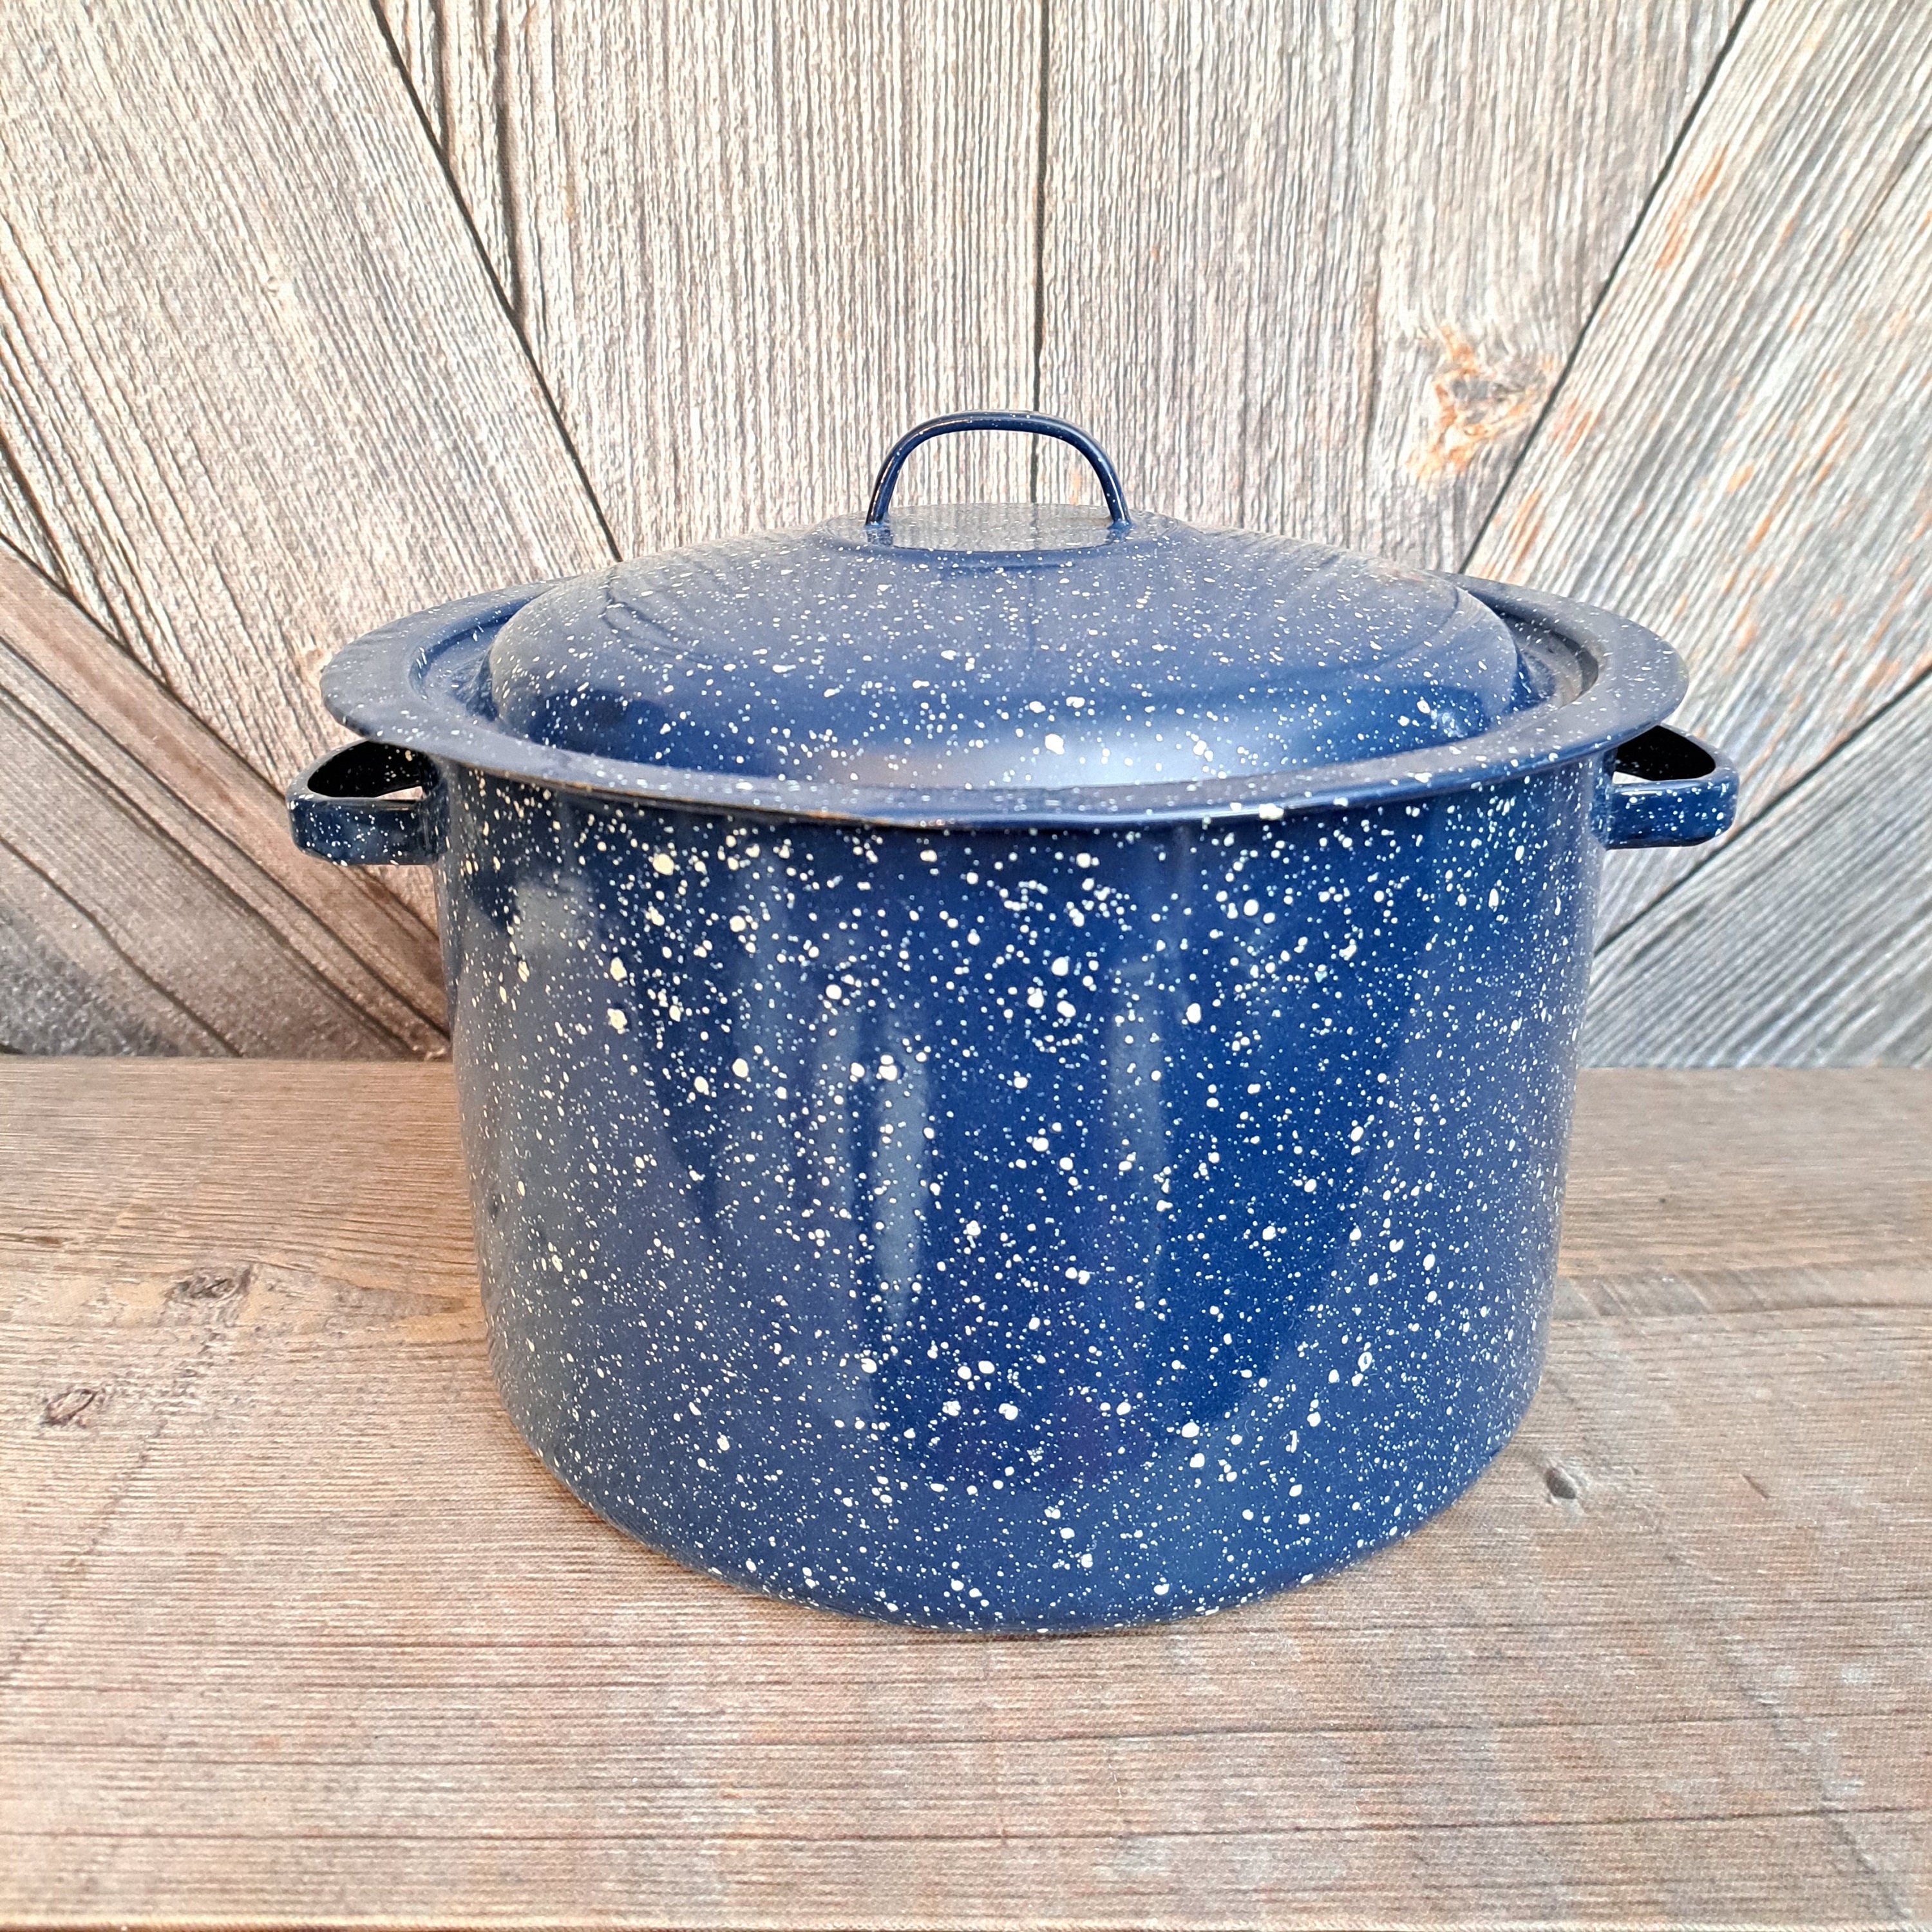 Set of 2 VTG Round Enamel Pots Pan Set Turquoise Blue Farmhouse